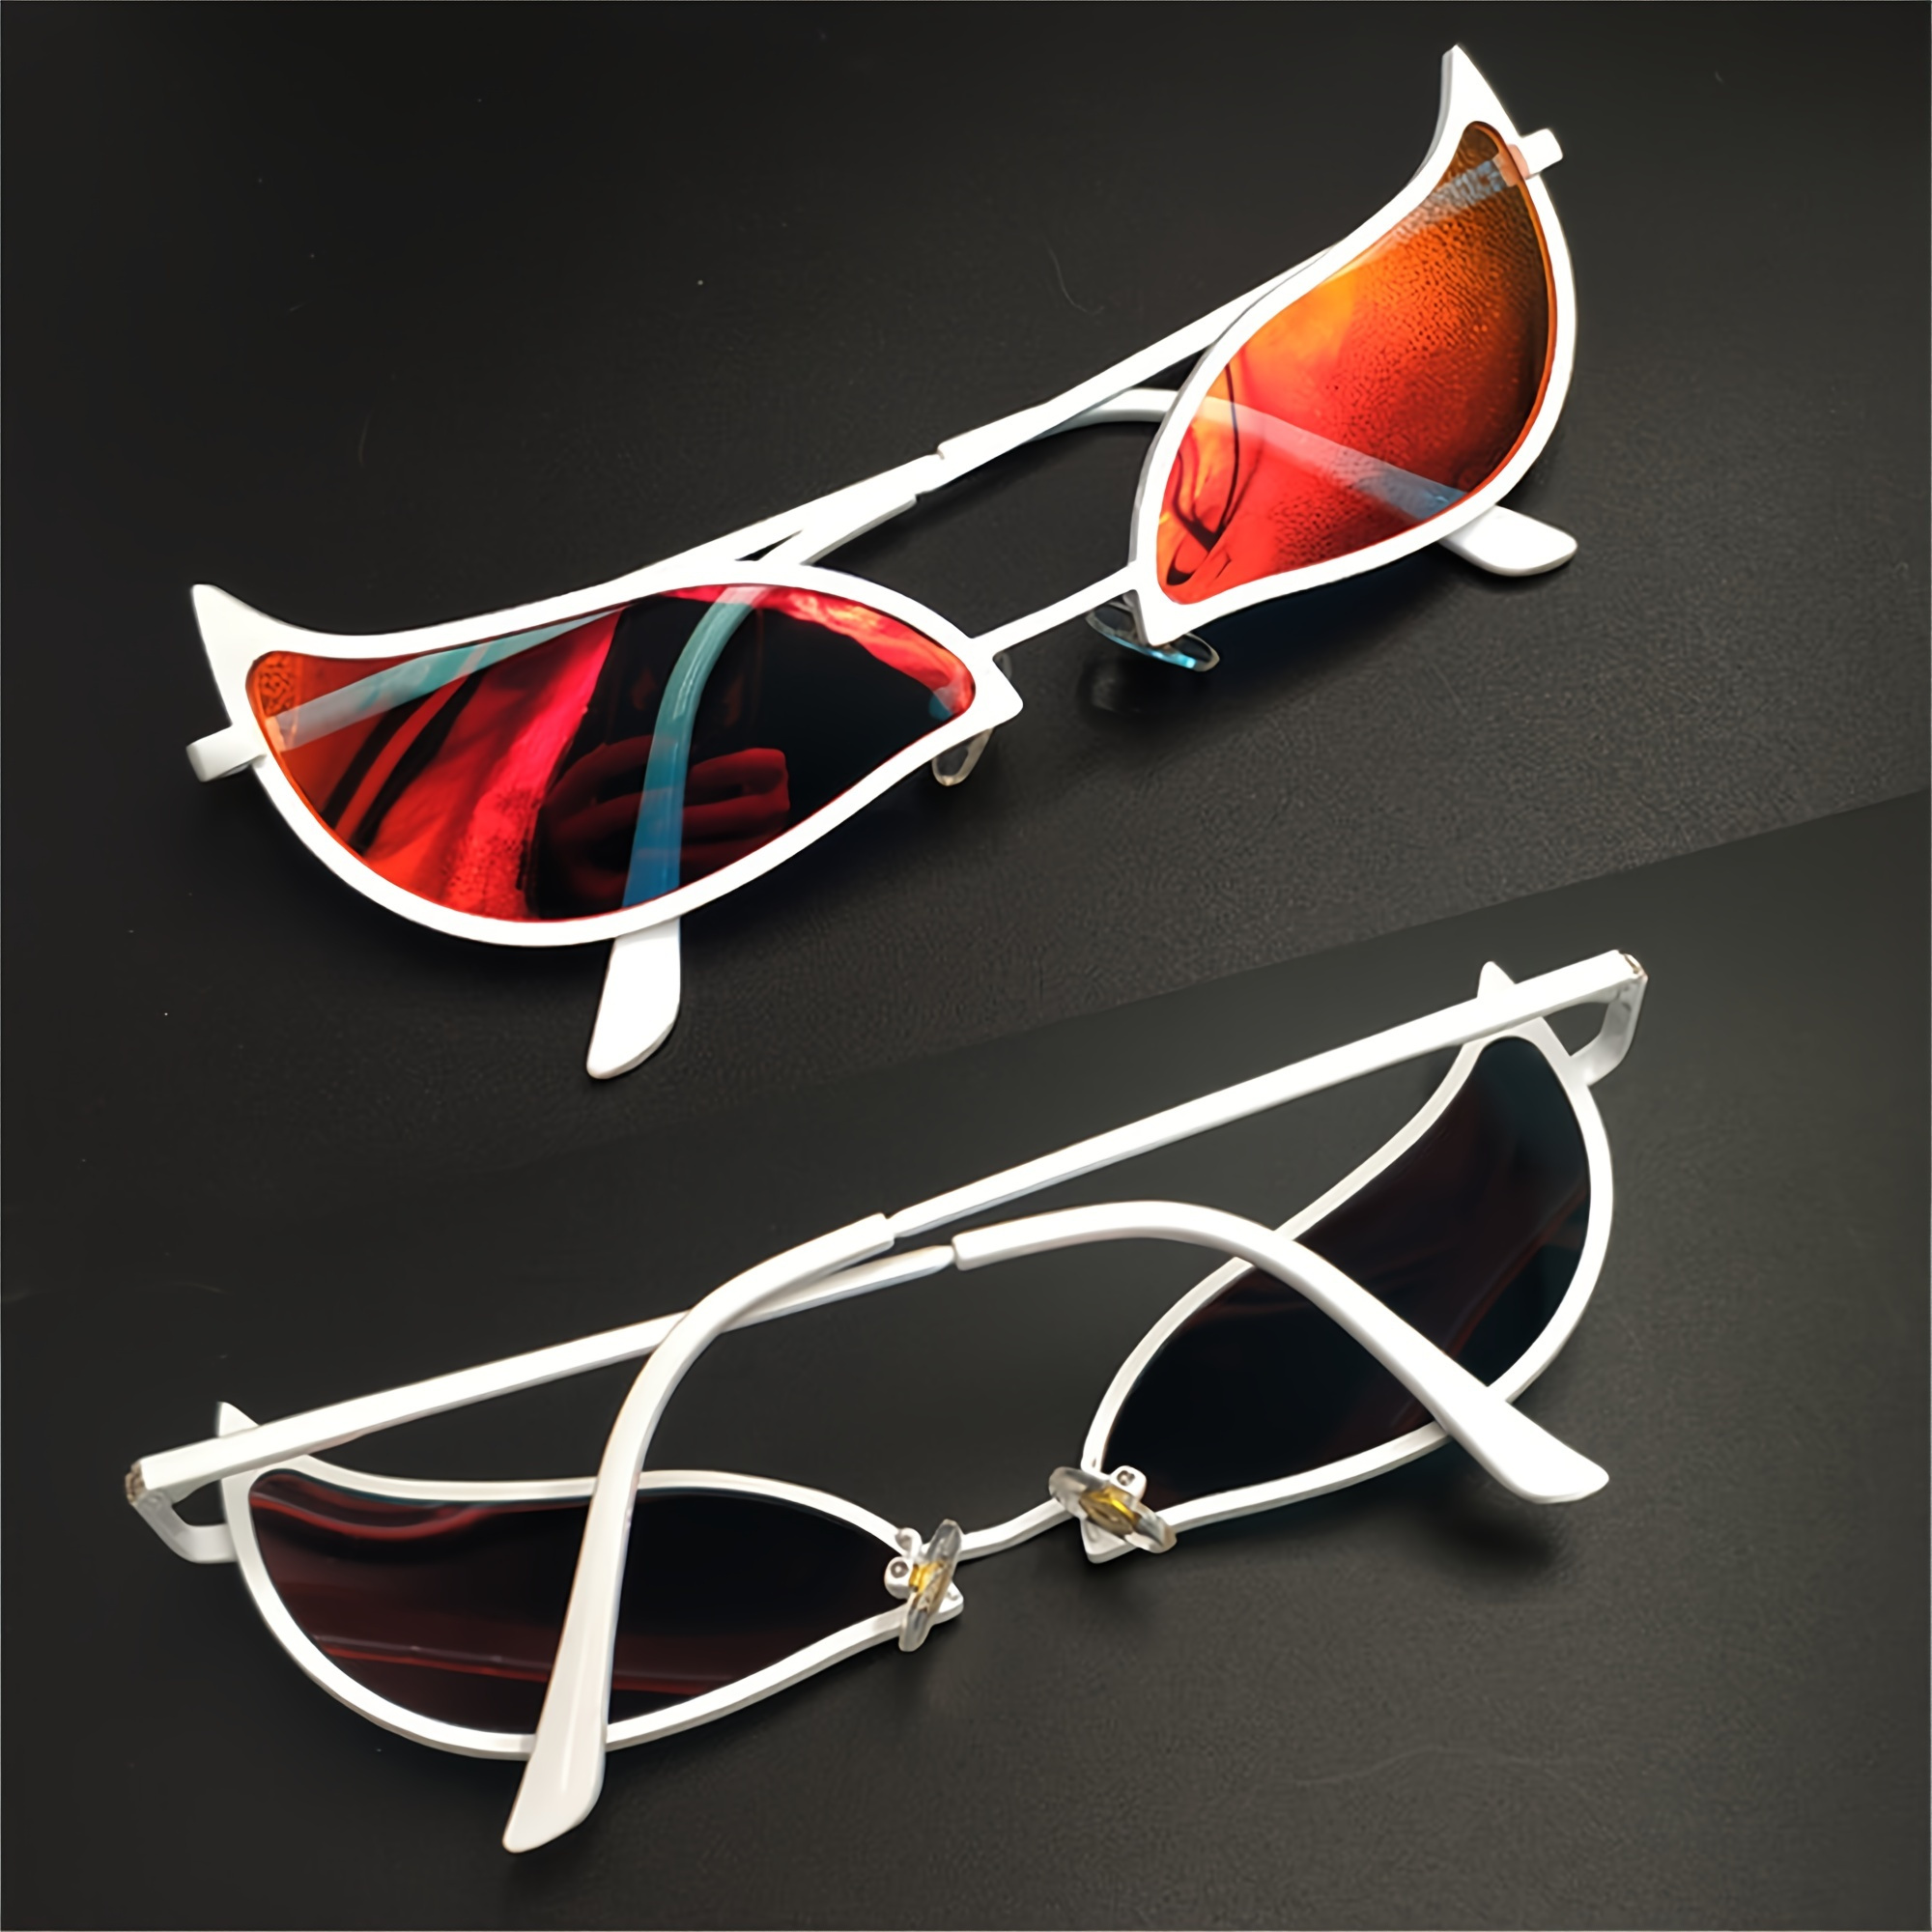 Doflamingo Sunglasses – Cosprop Sensei